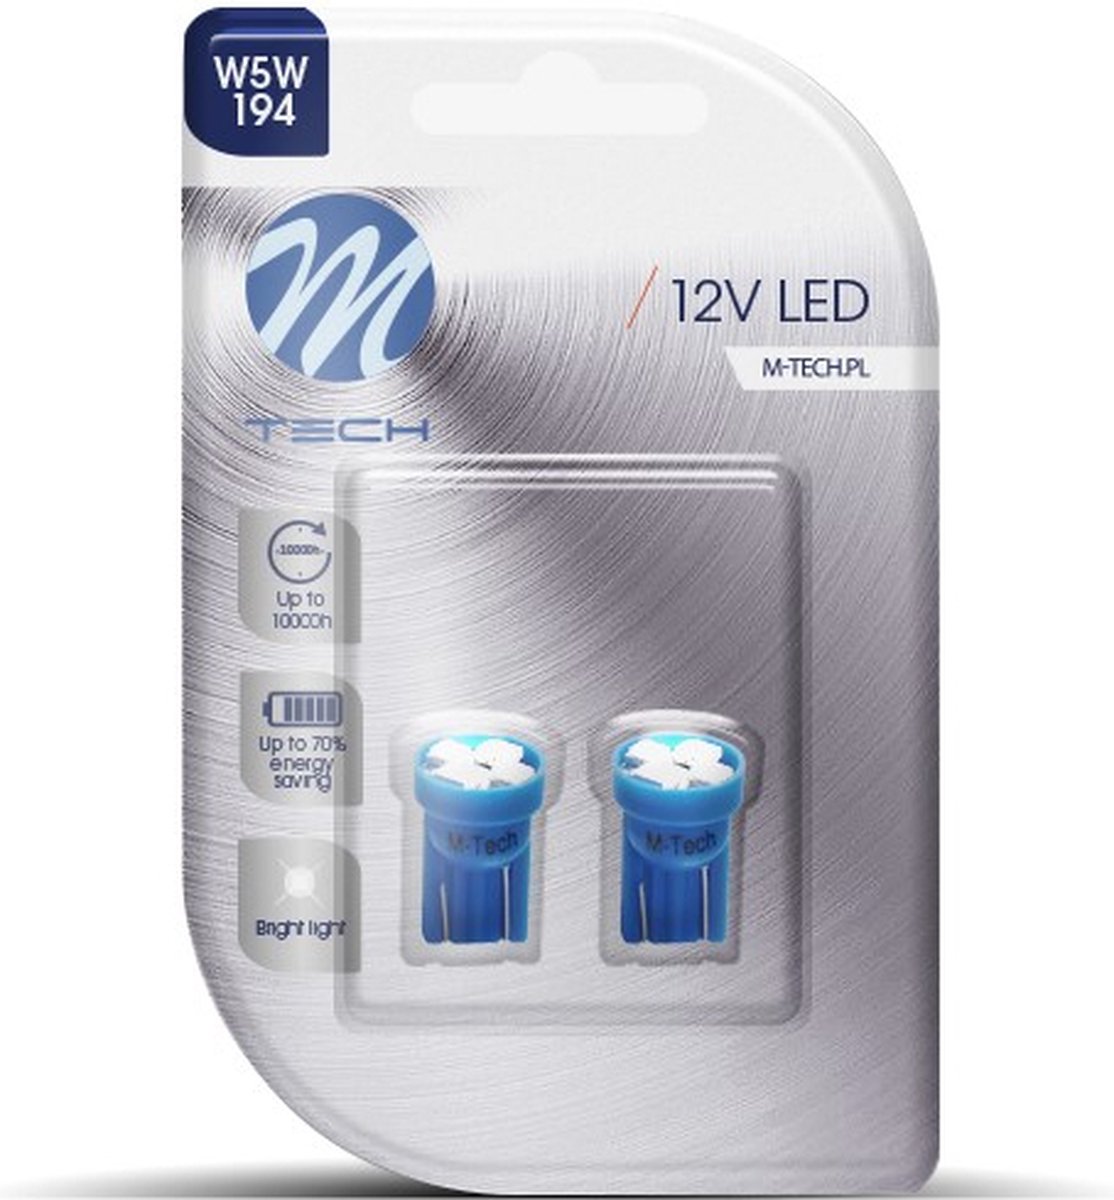 M-Tech LED W5W 12V - Basic 4x Led diode - Blauw - Set